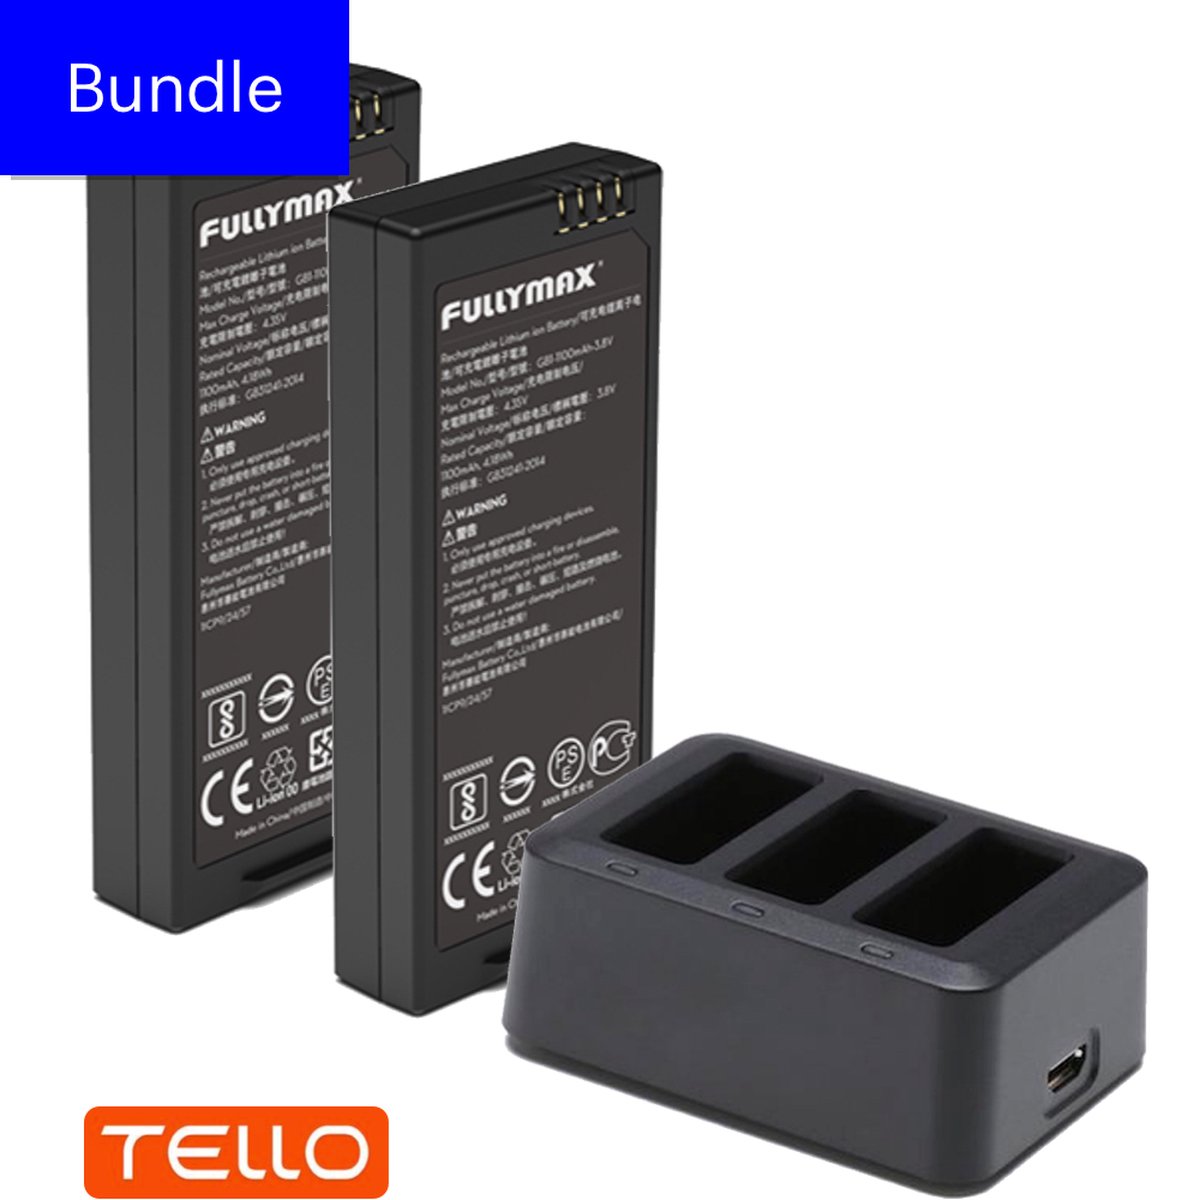 Druppelen energie zingen DJI Tello Battery Charging Hub Bundle - 2x Tello Battery - Accu - Acculader  - Lader | bol.com